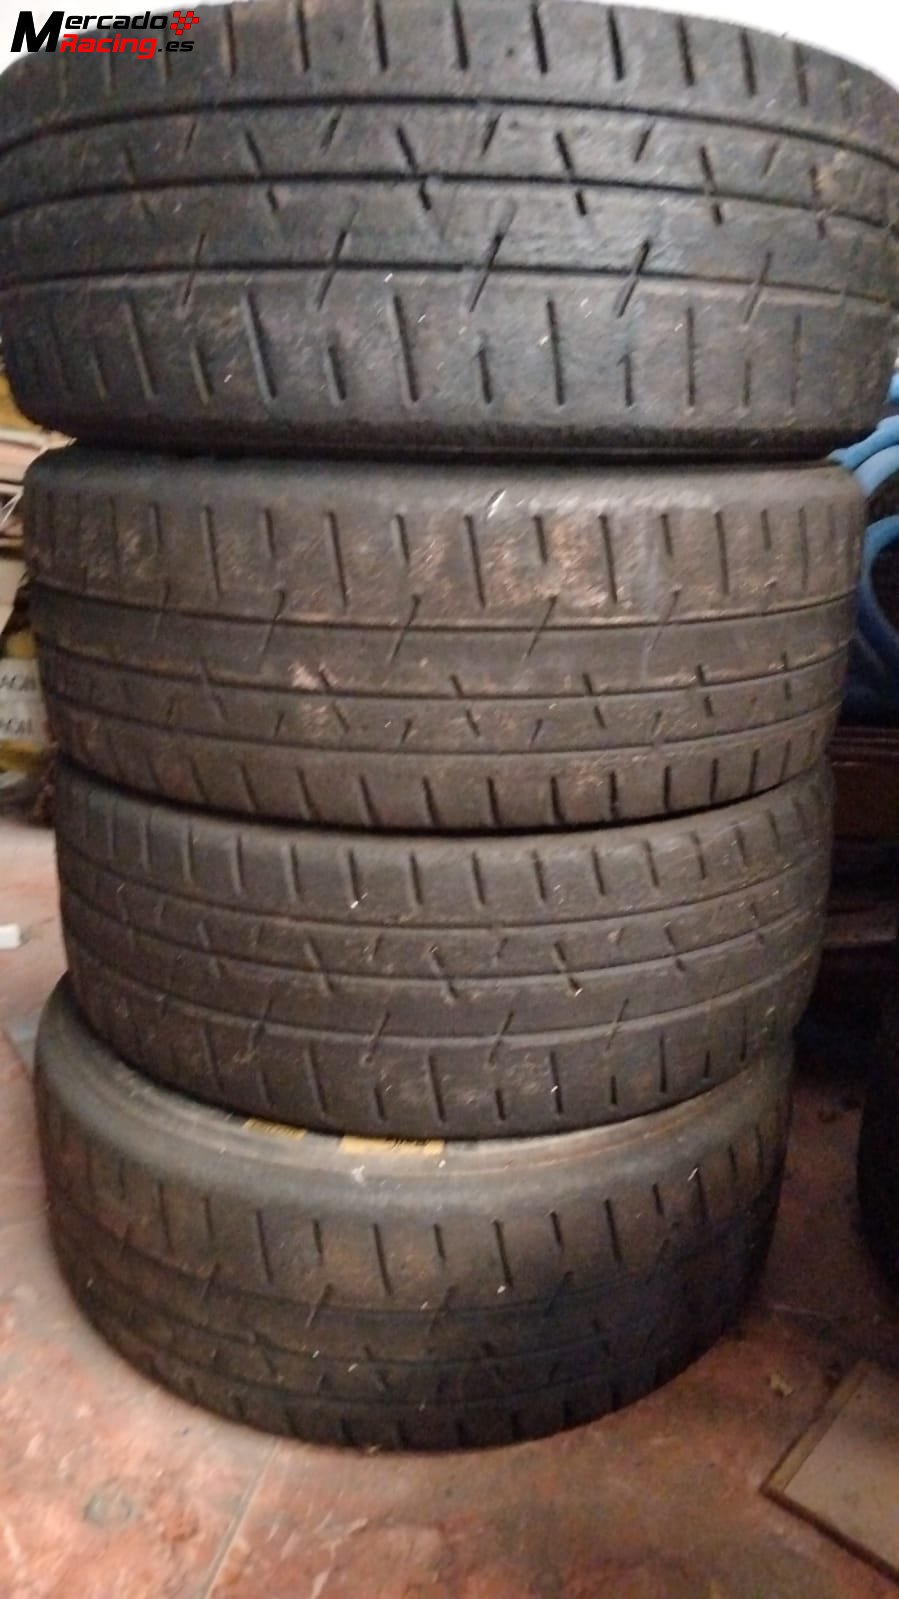 4 neumáticos hankook t52 16 